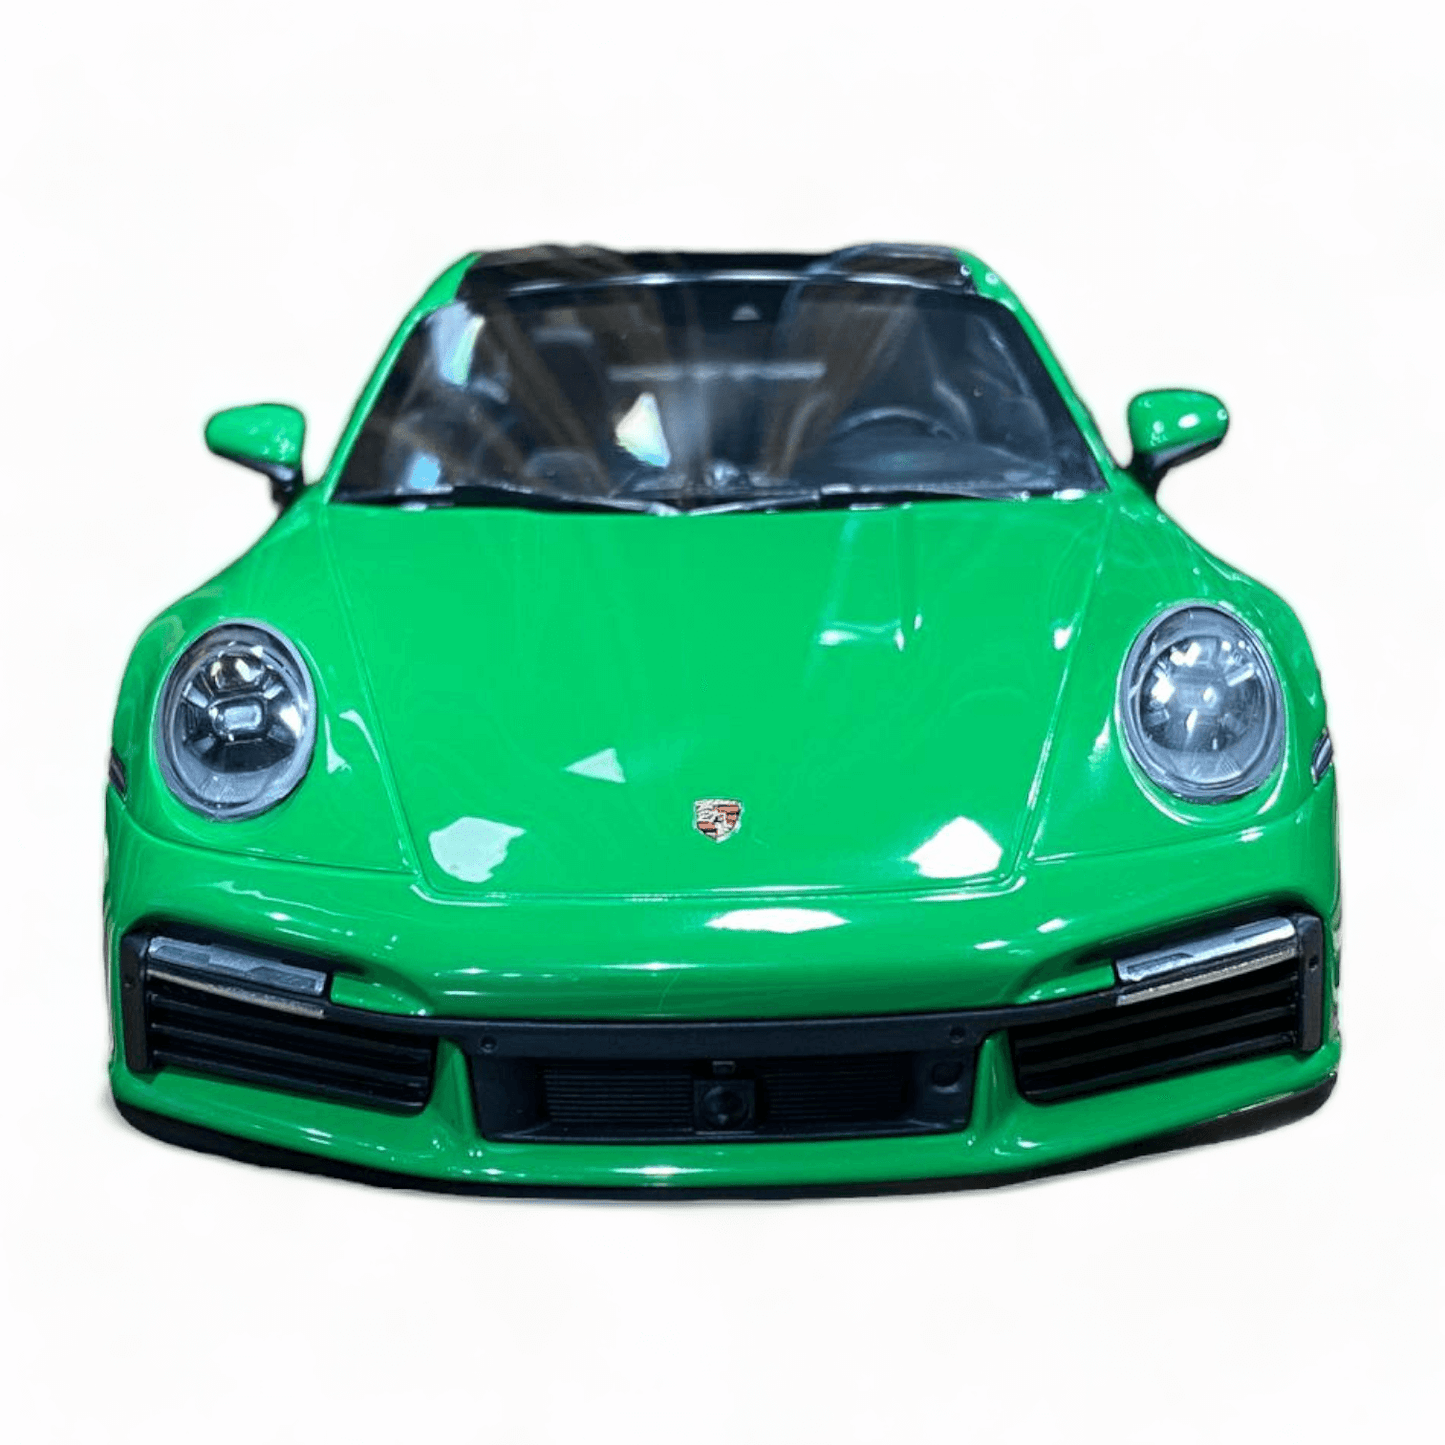 Porsche 911 Turbo S Minichamps|Sold in Dturman.com Dubai UAE.